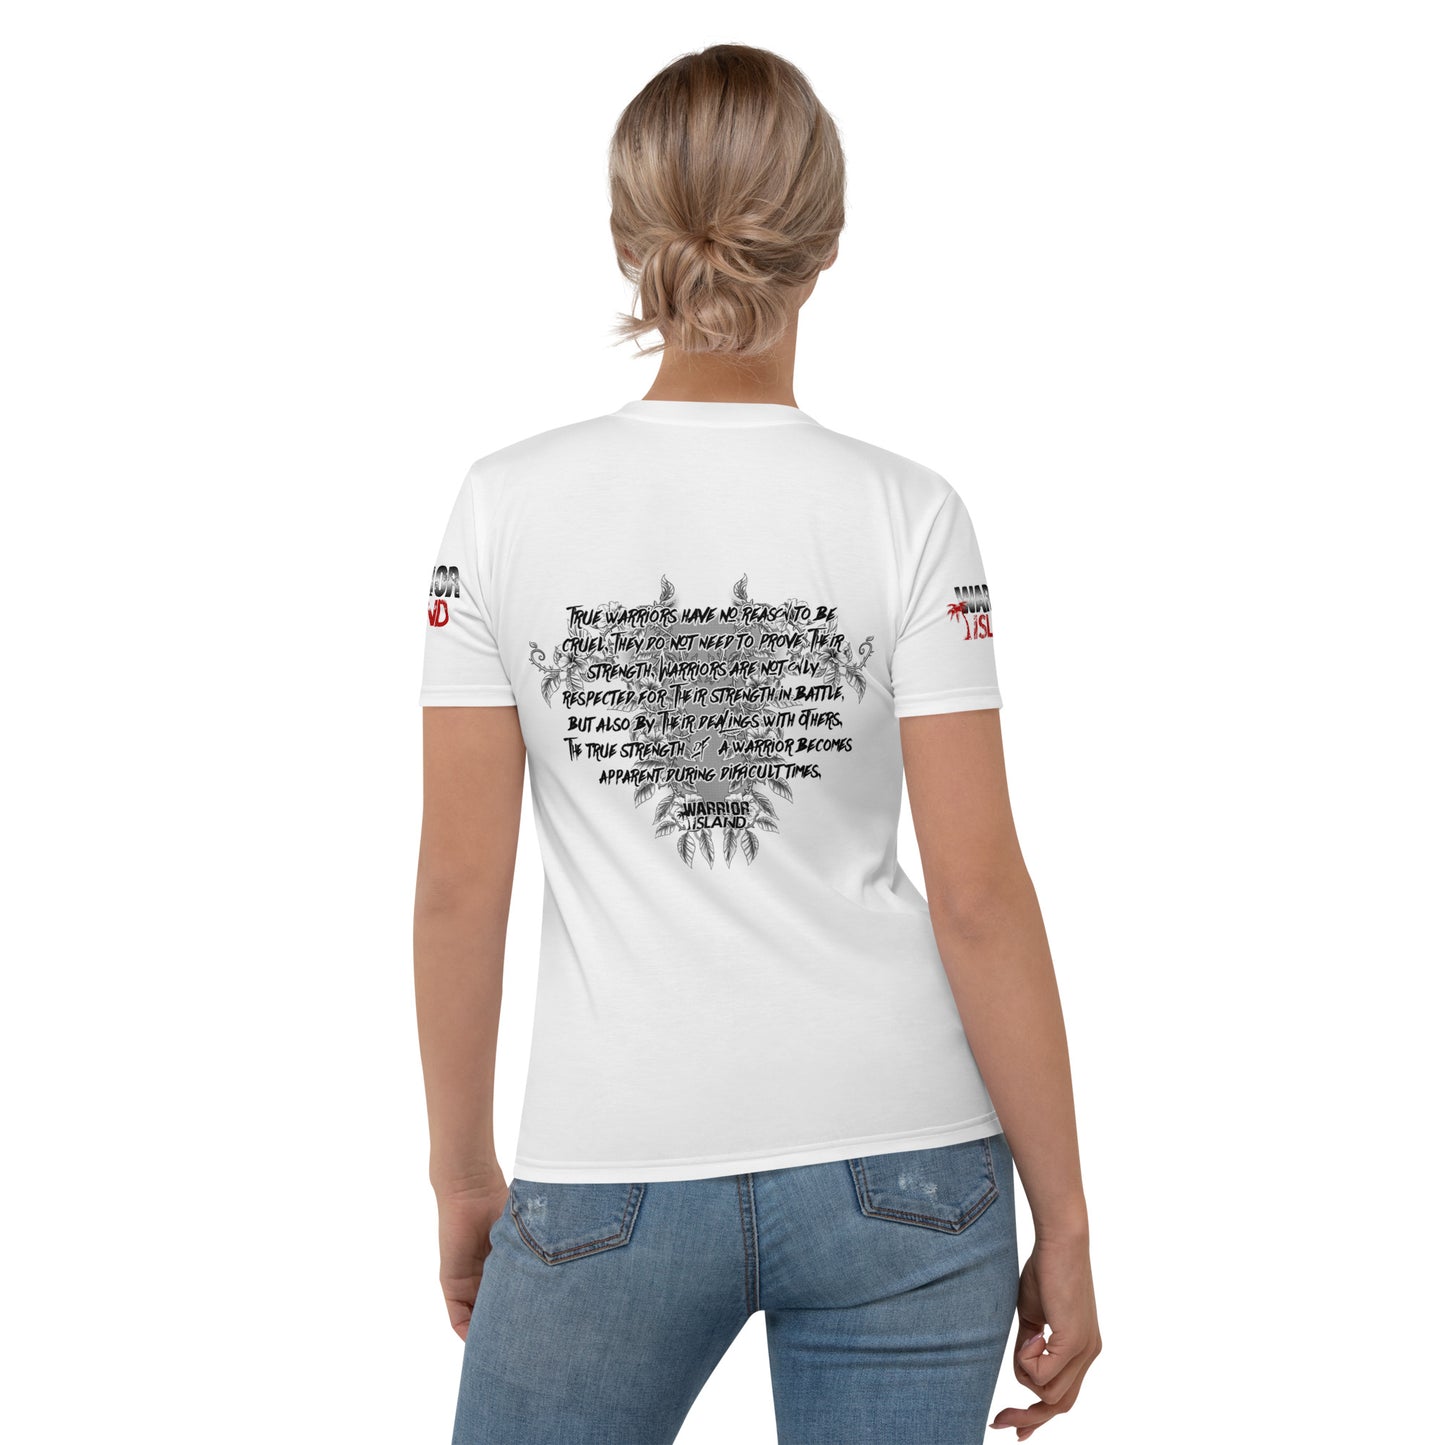 Warrior Island Respect Tiki Women's T-shirt